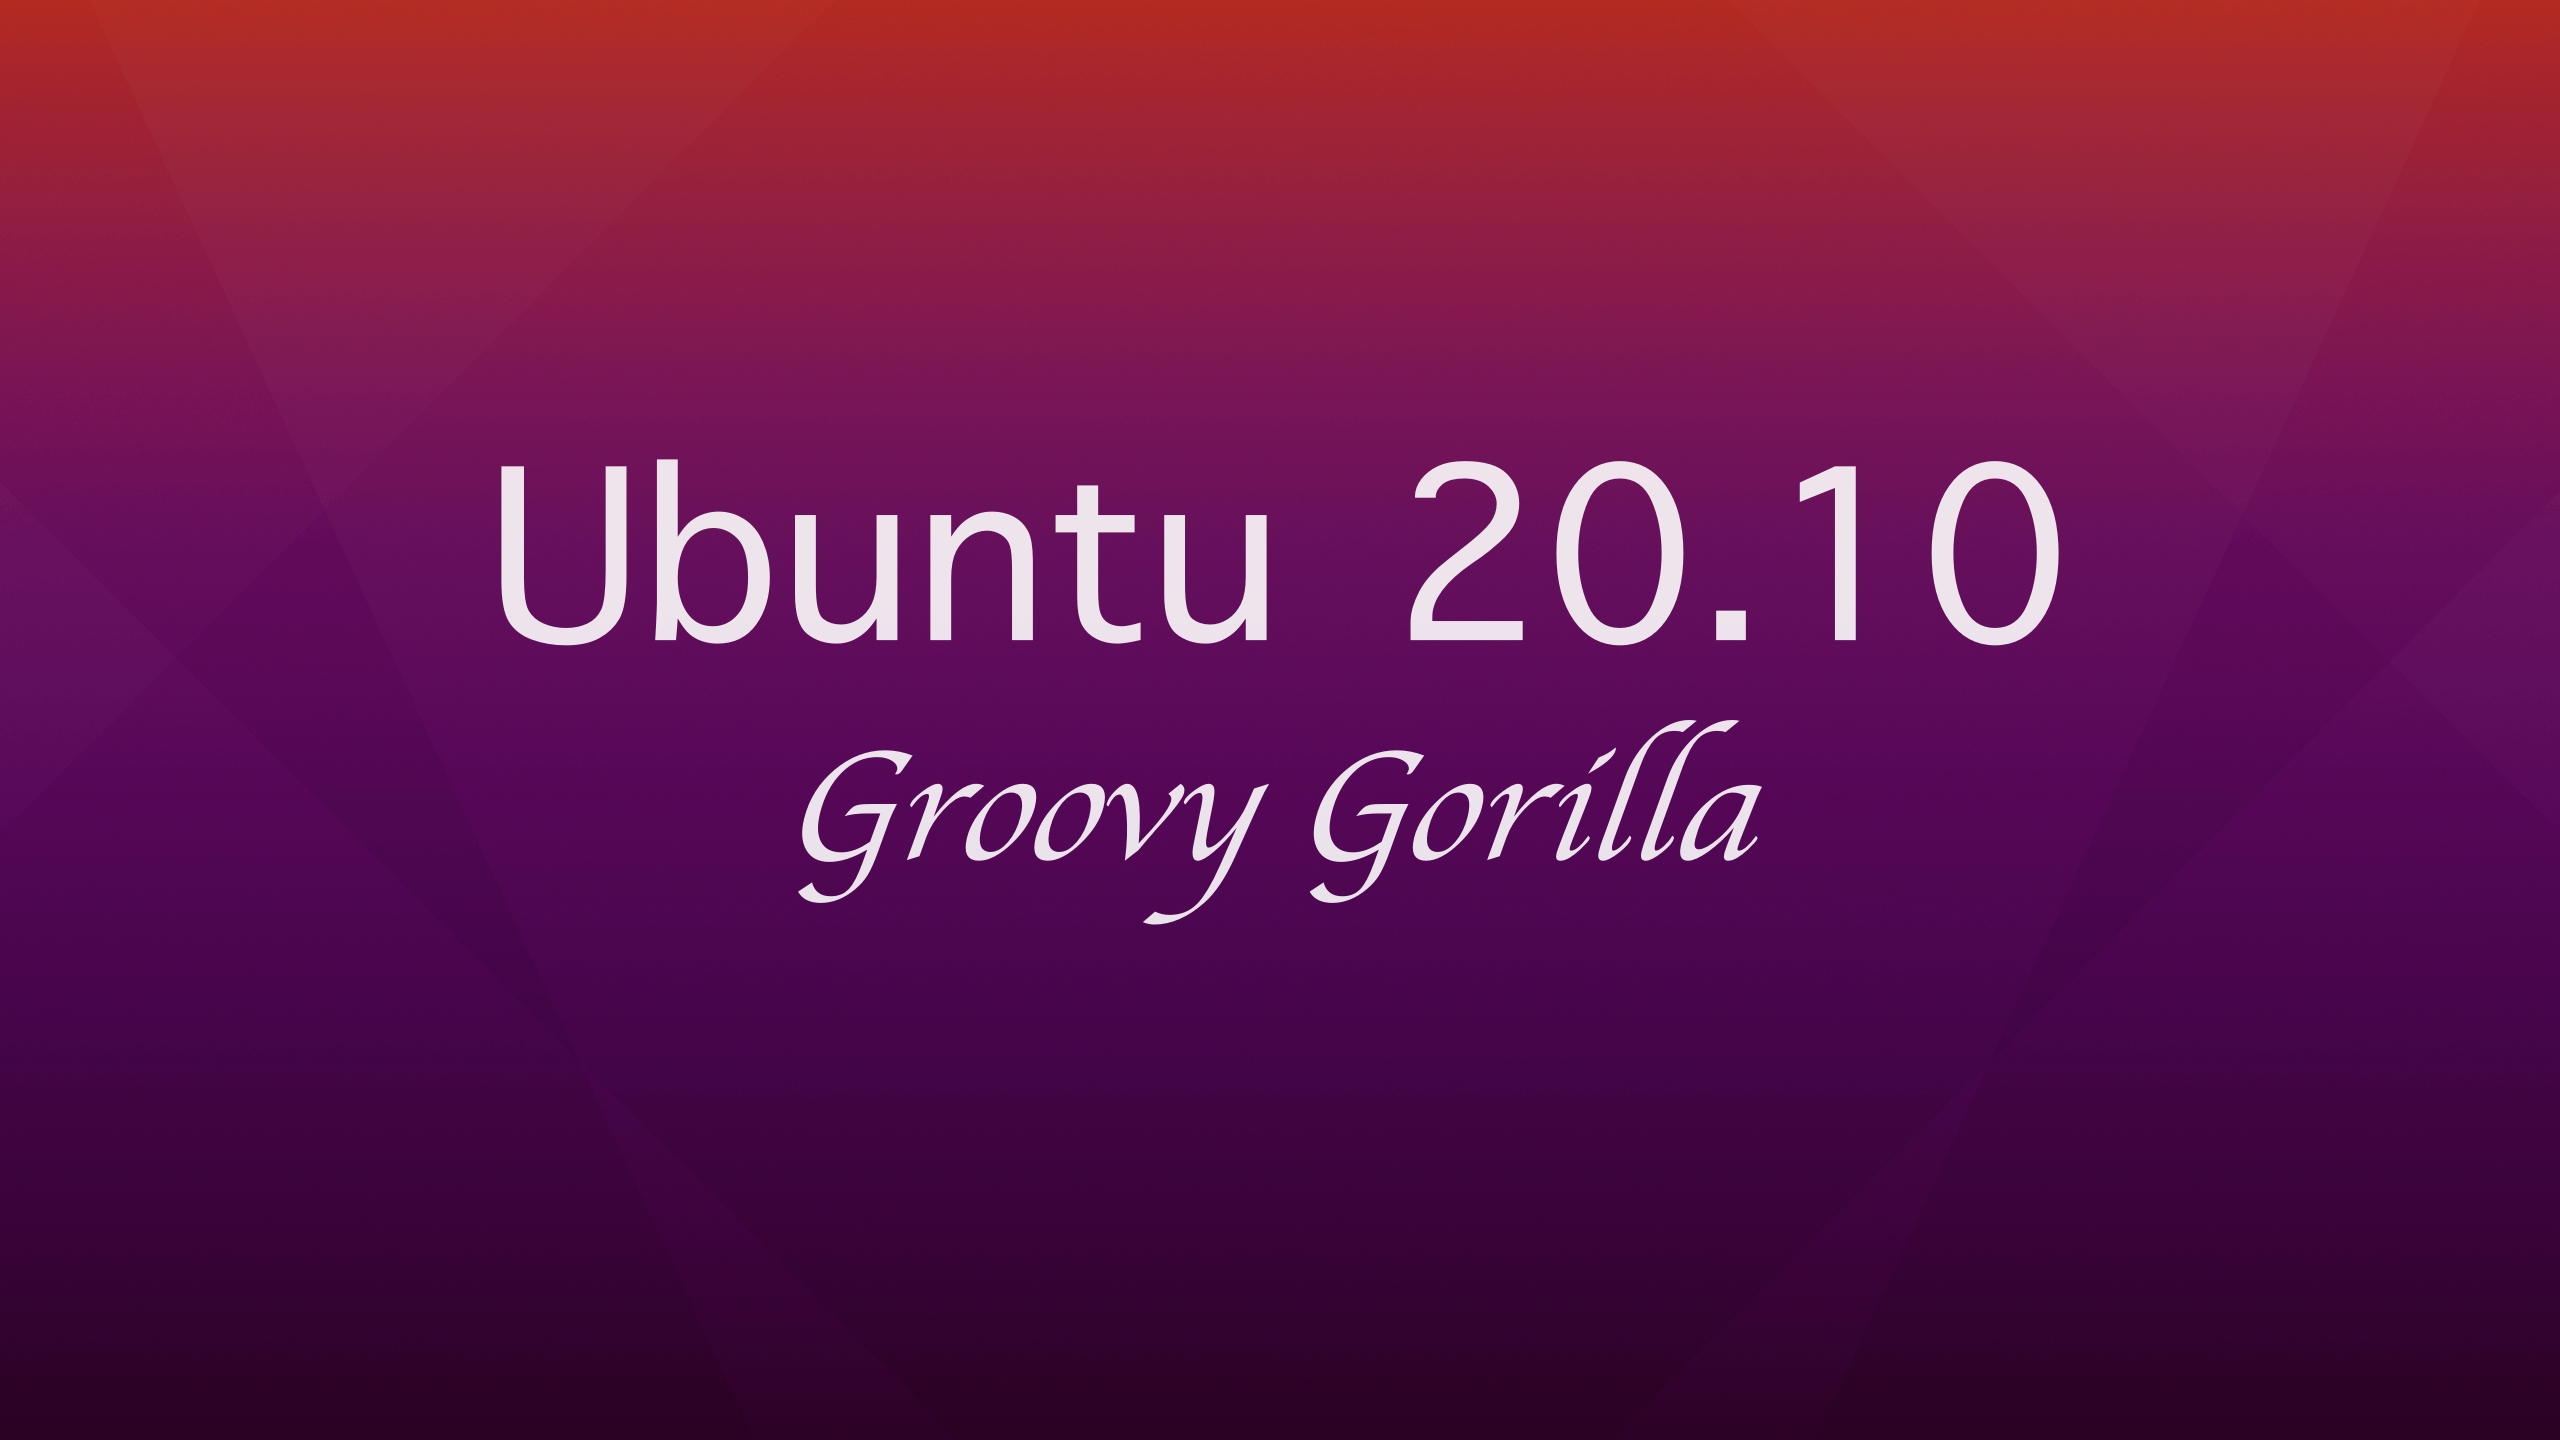 Ubuntu 20.10 “Groovy Gorilla” Is Slated for Release on October 22